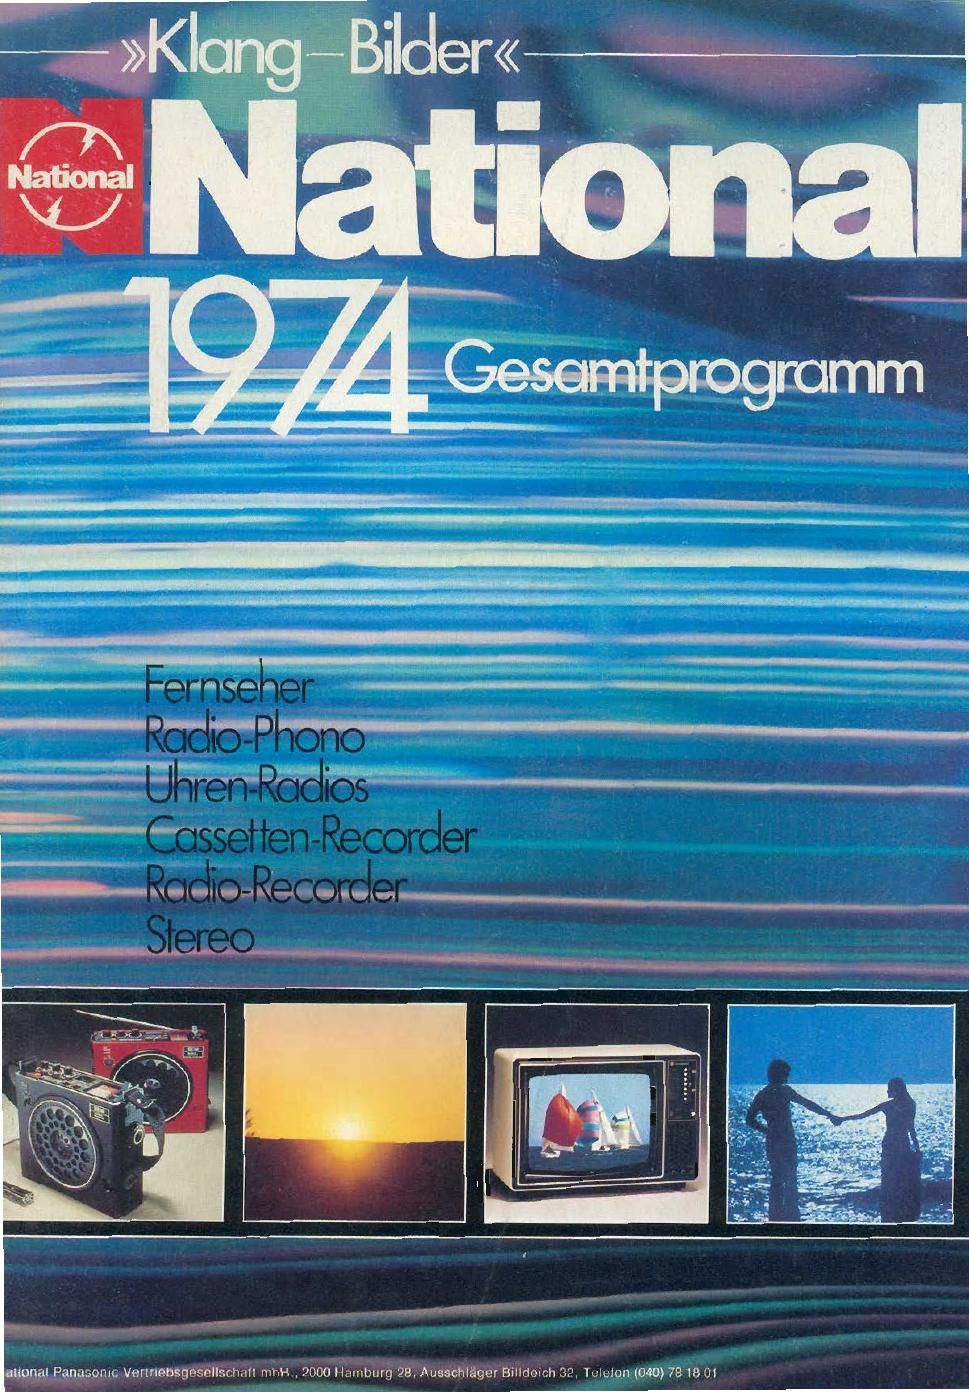 national catalog 1974